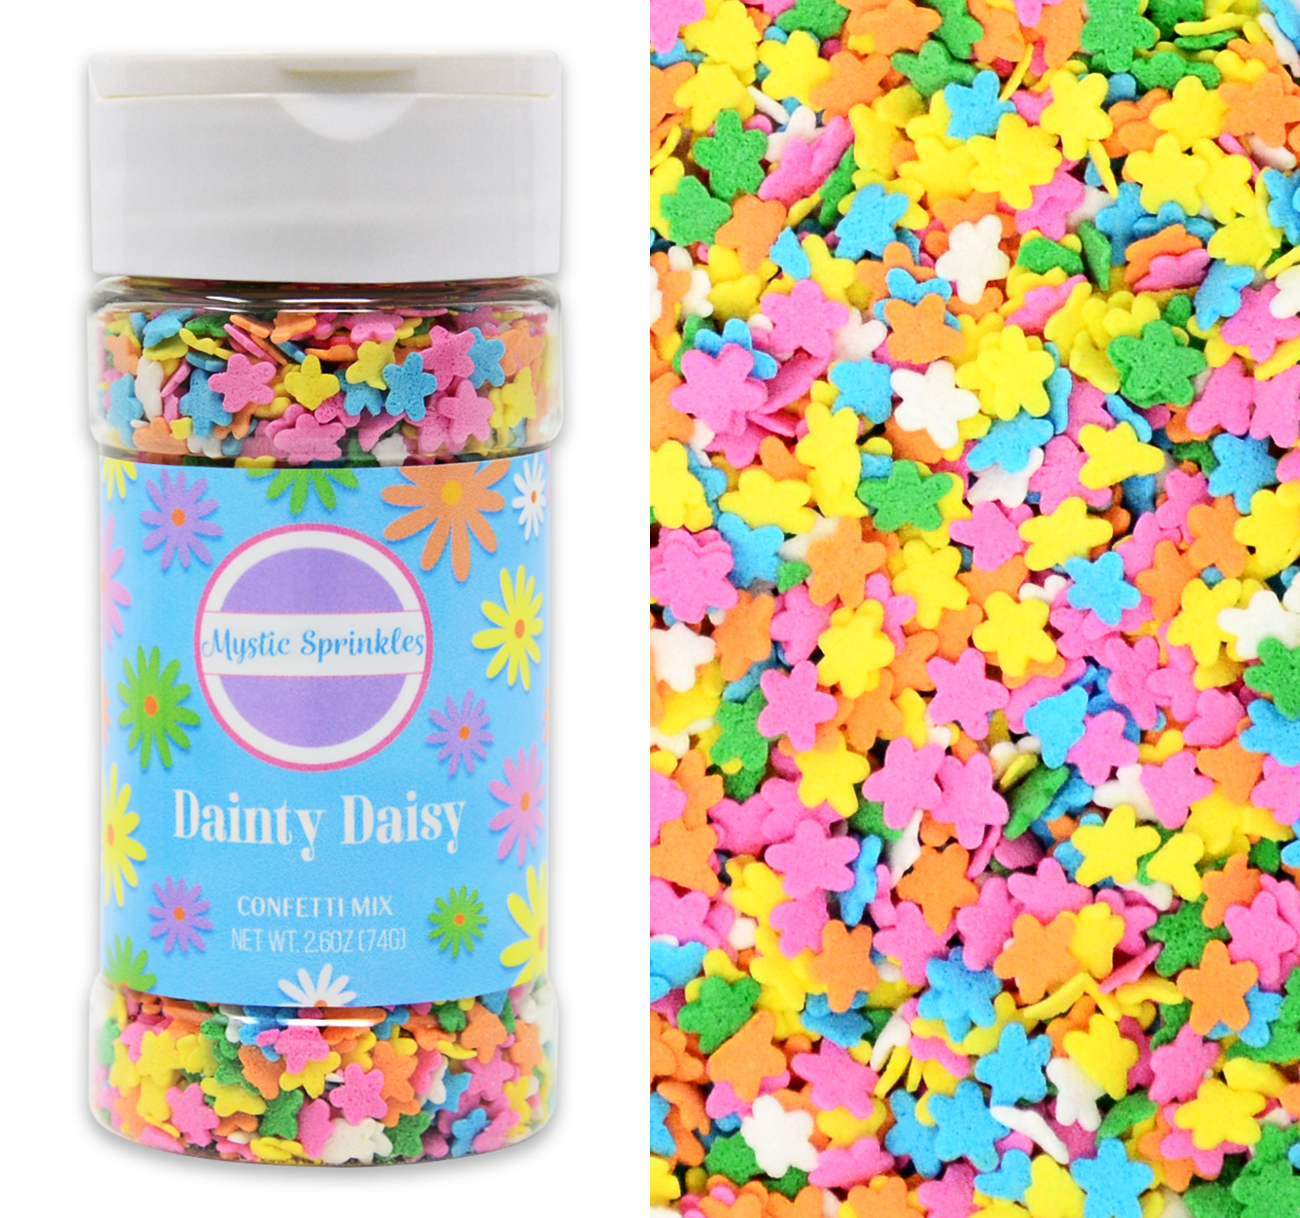 Mystic Sprinkles Dainty Daisy Confetti Mix 2.6 oz Bottle, Size: 1.75 x 1.75 x 4.25, Blue